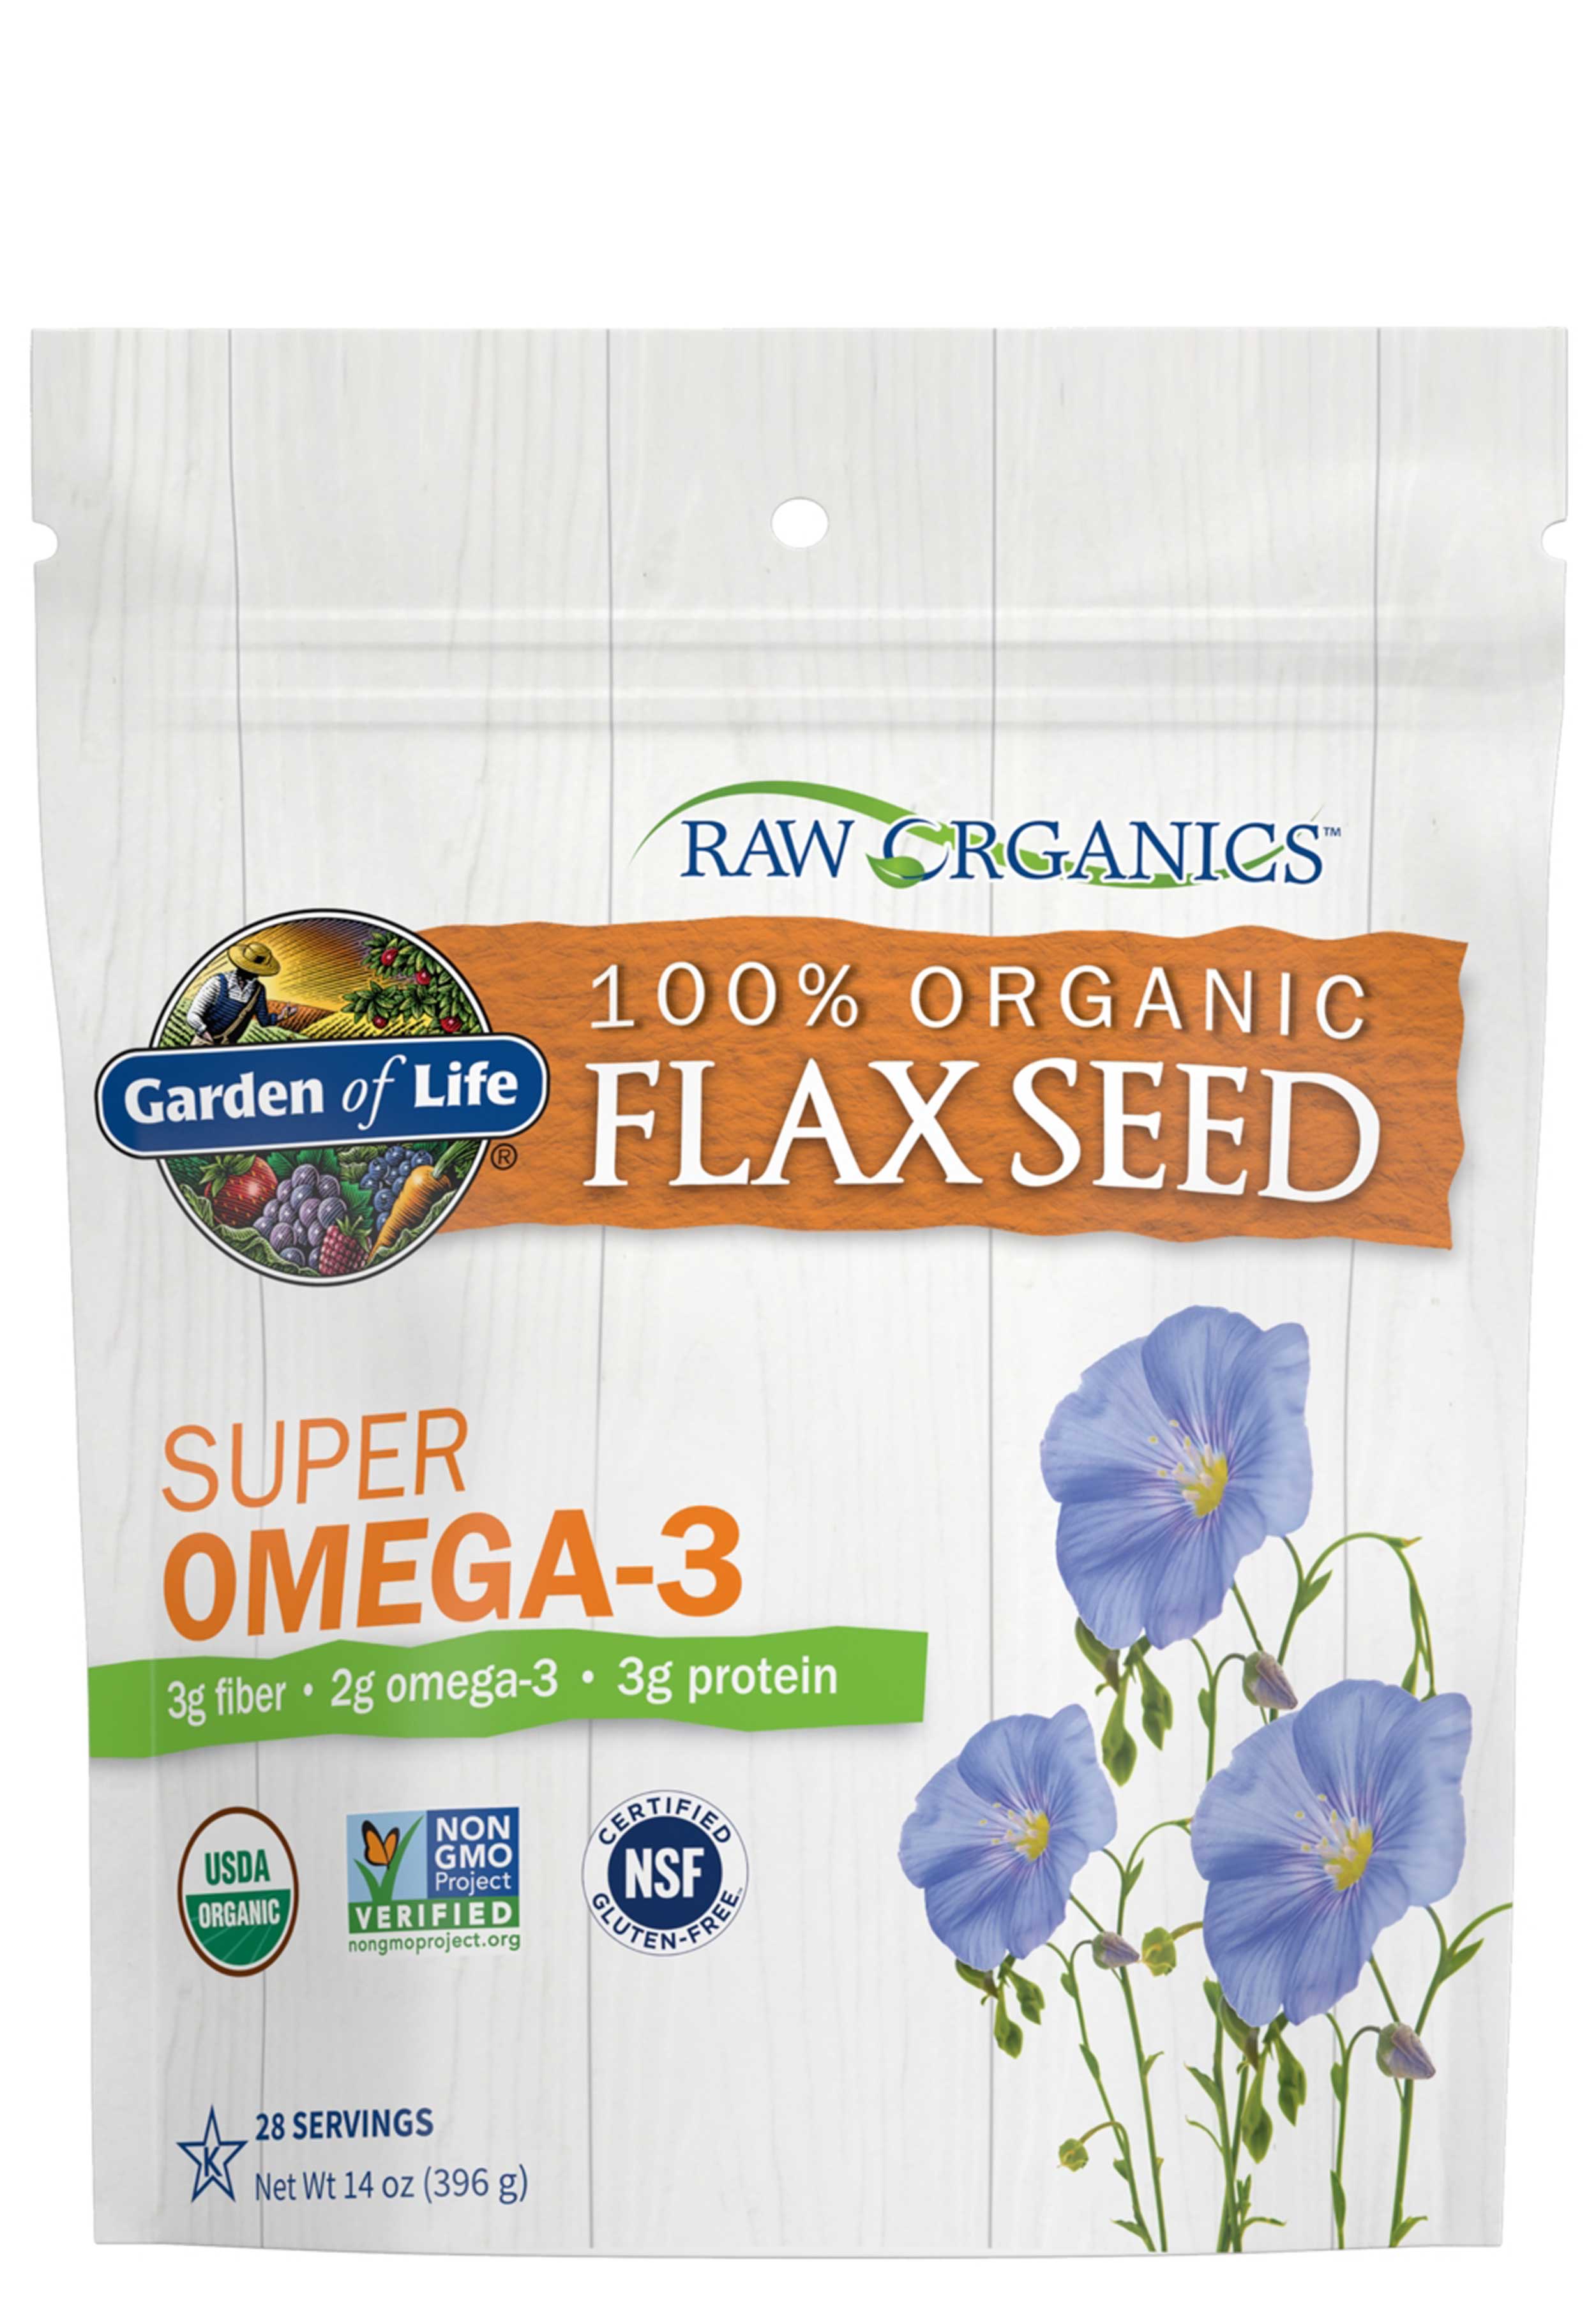 Garden of Life Raw Organics 100% Organic Flax Seed